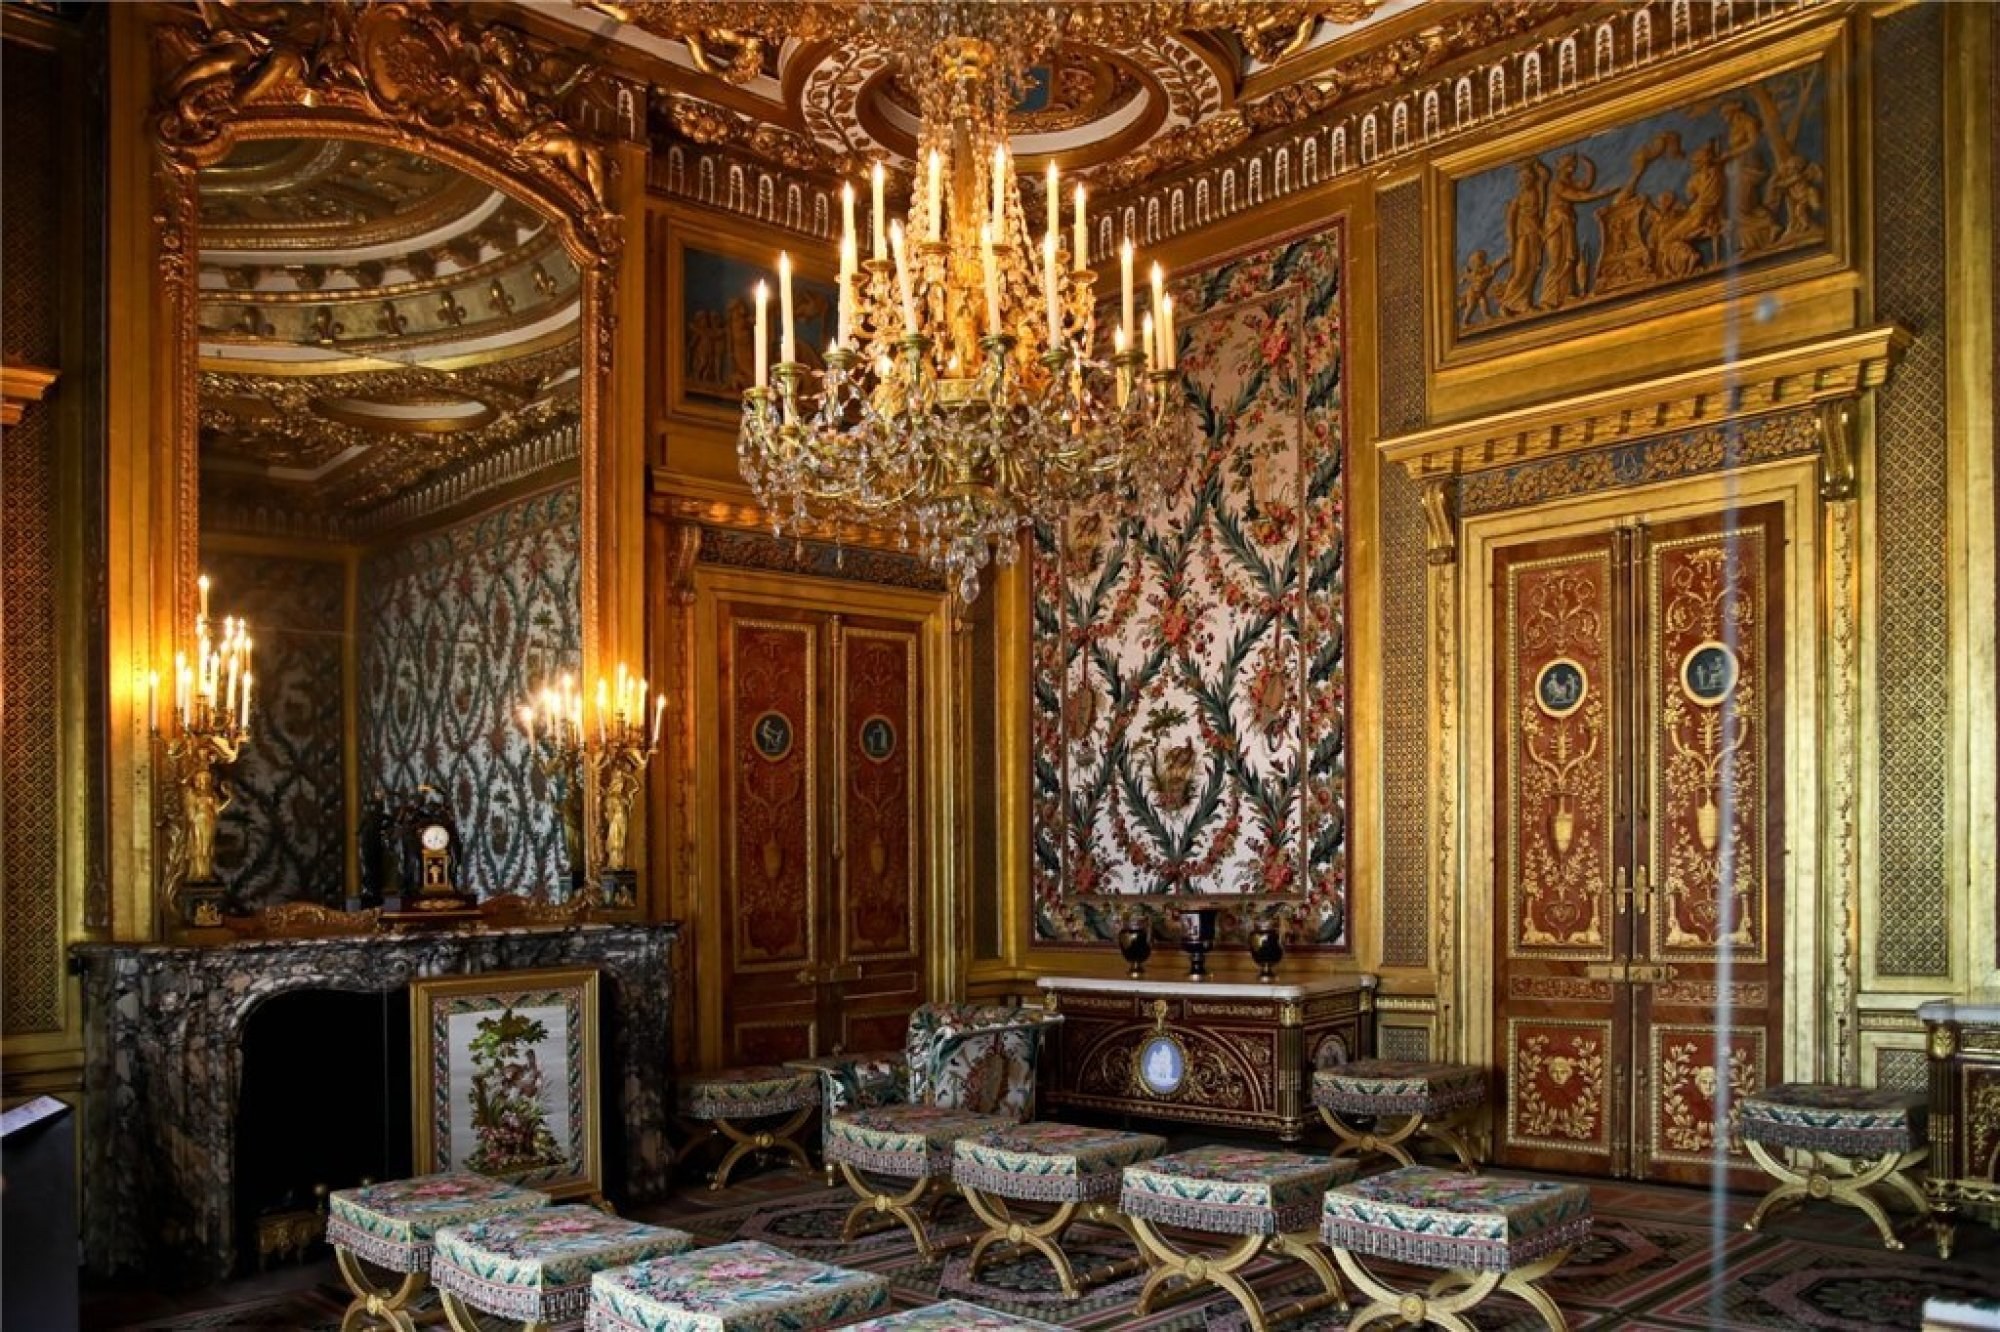 Версаль интерьер. Ампир дворец Фонтенбло. Версальский дворец спальня короля. Спальня императора, дворец Фонтенбло. Версальский дворец рококо.